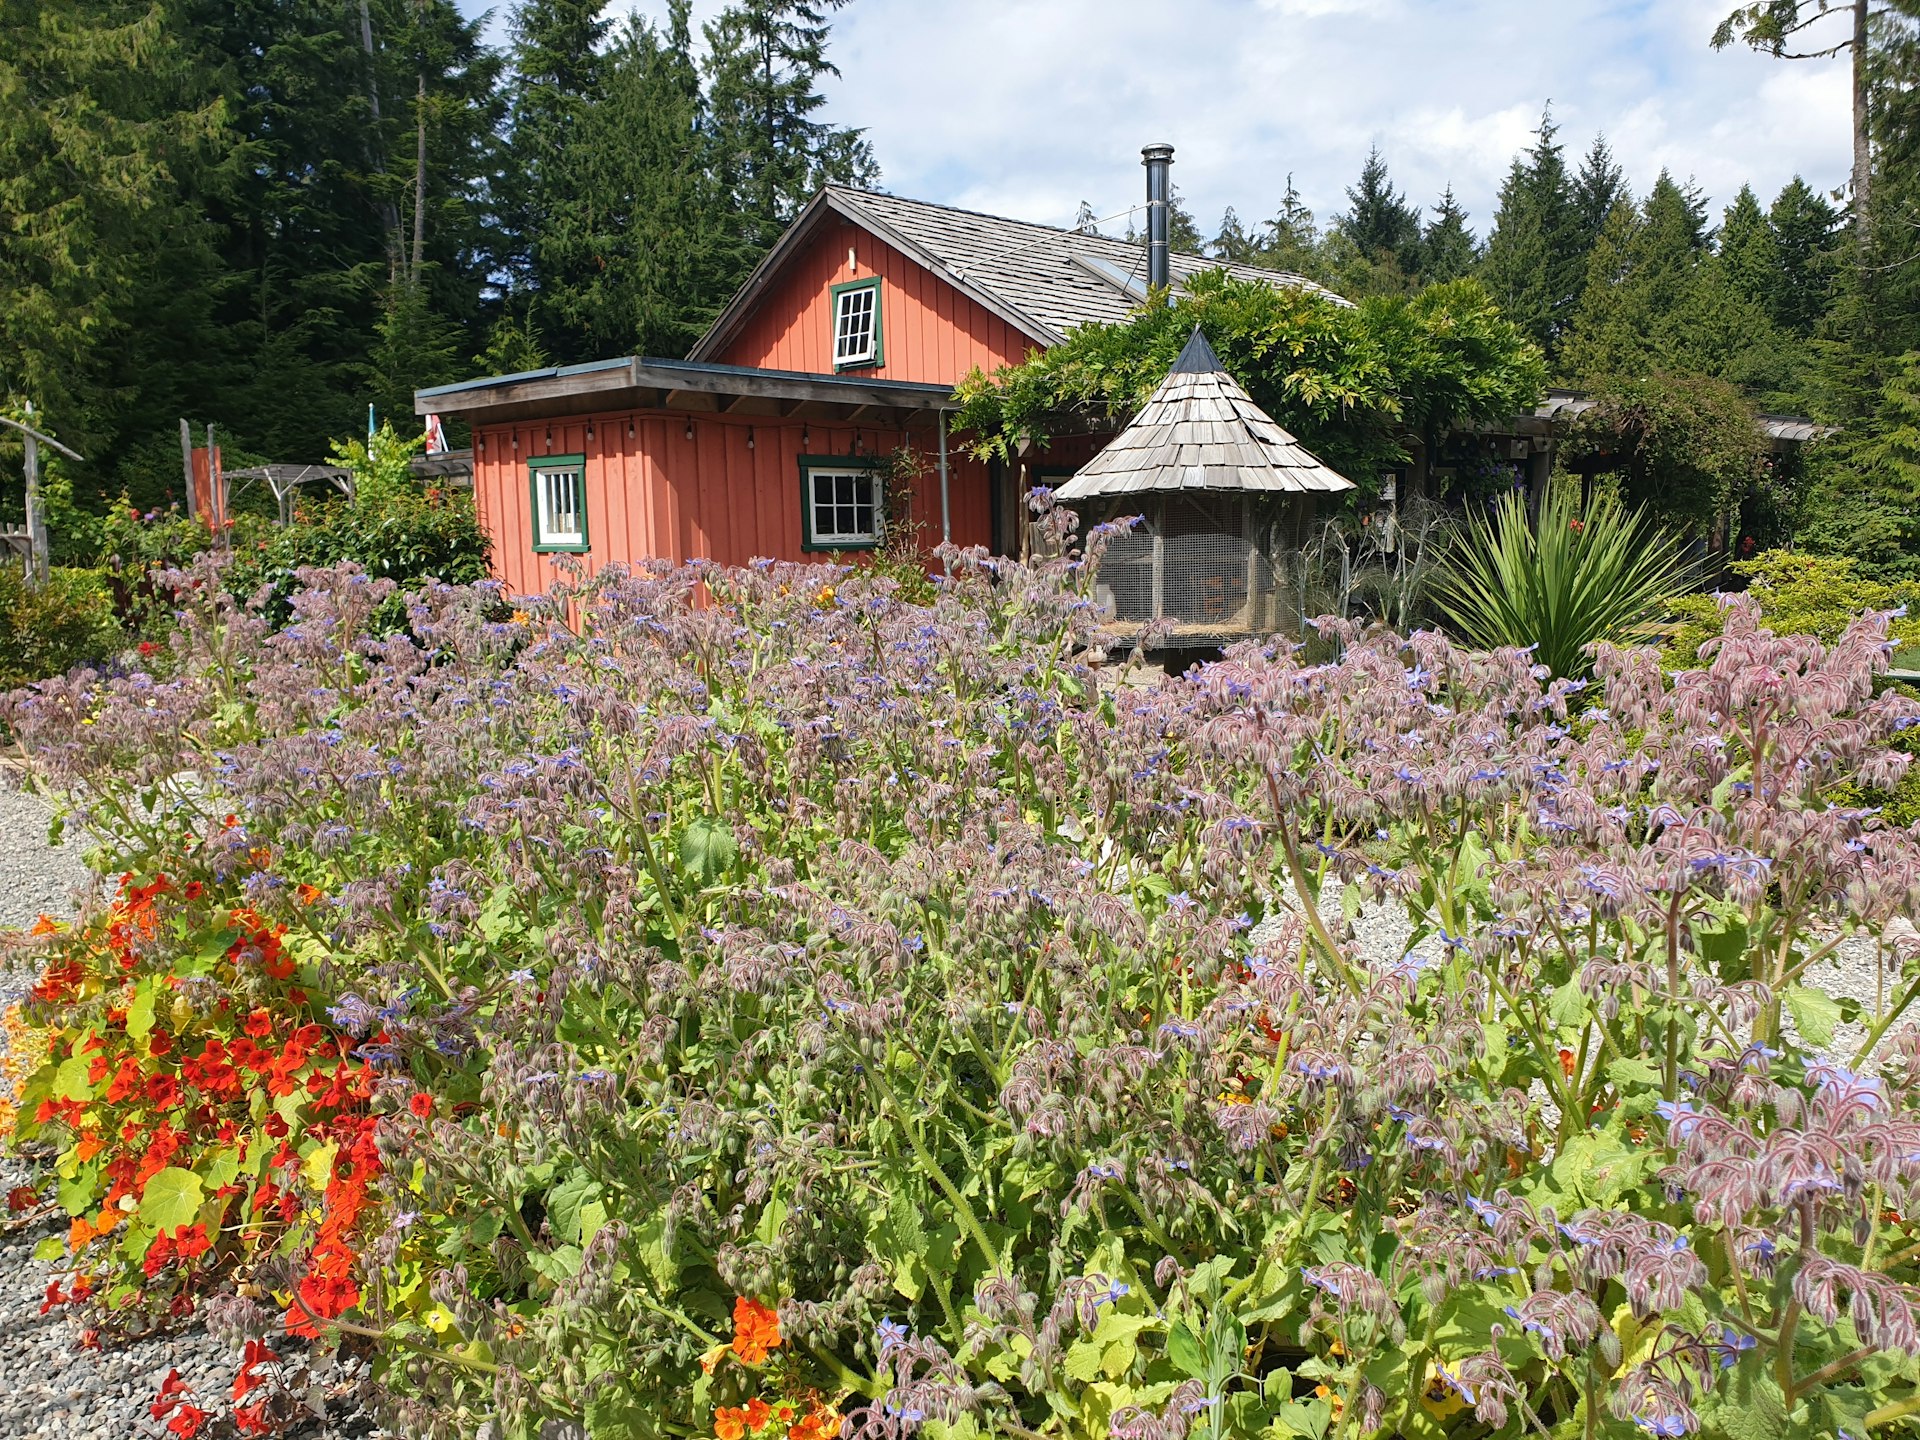 Blooming garden flower beds, Naa’Waya’Sum Coastal Indigenous Gardens (formerly Tofino Botanical Gardens), Tofino, British Columbia, Canada